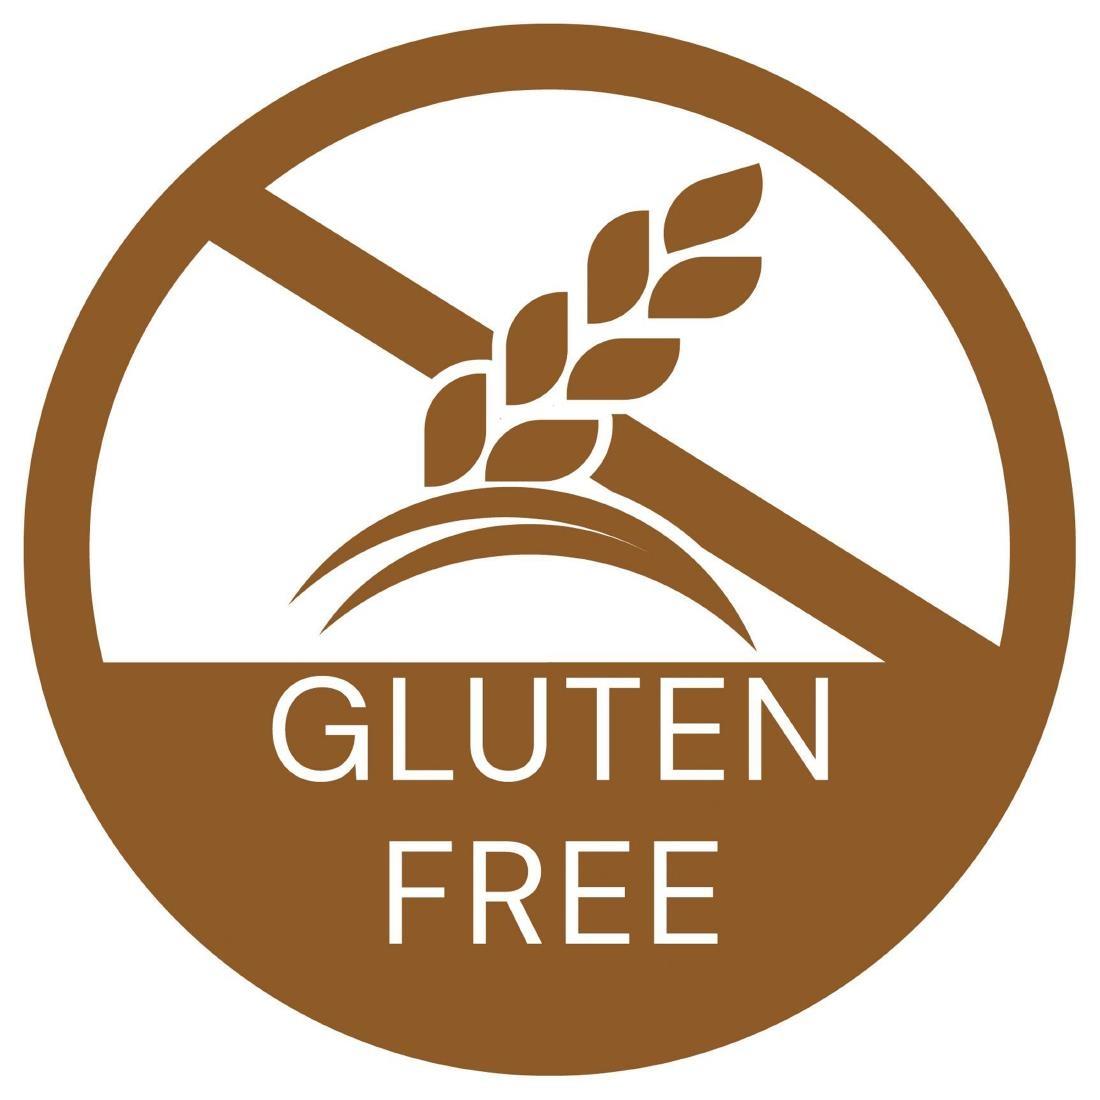 Vogue Food Allergy labels Gluten Free (Pack of 1000) - GJ060  - 1